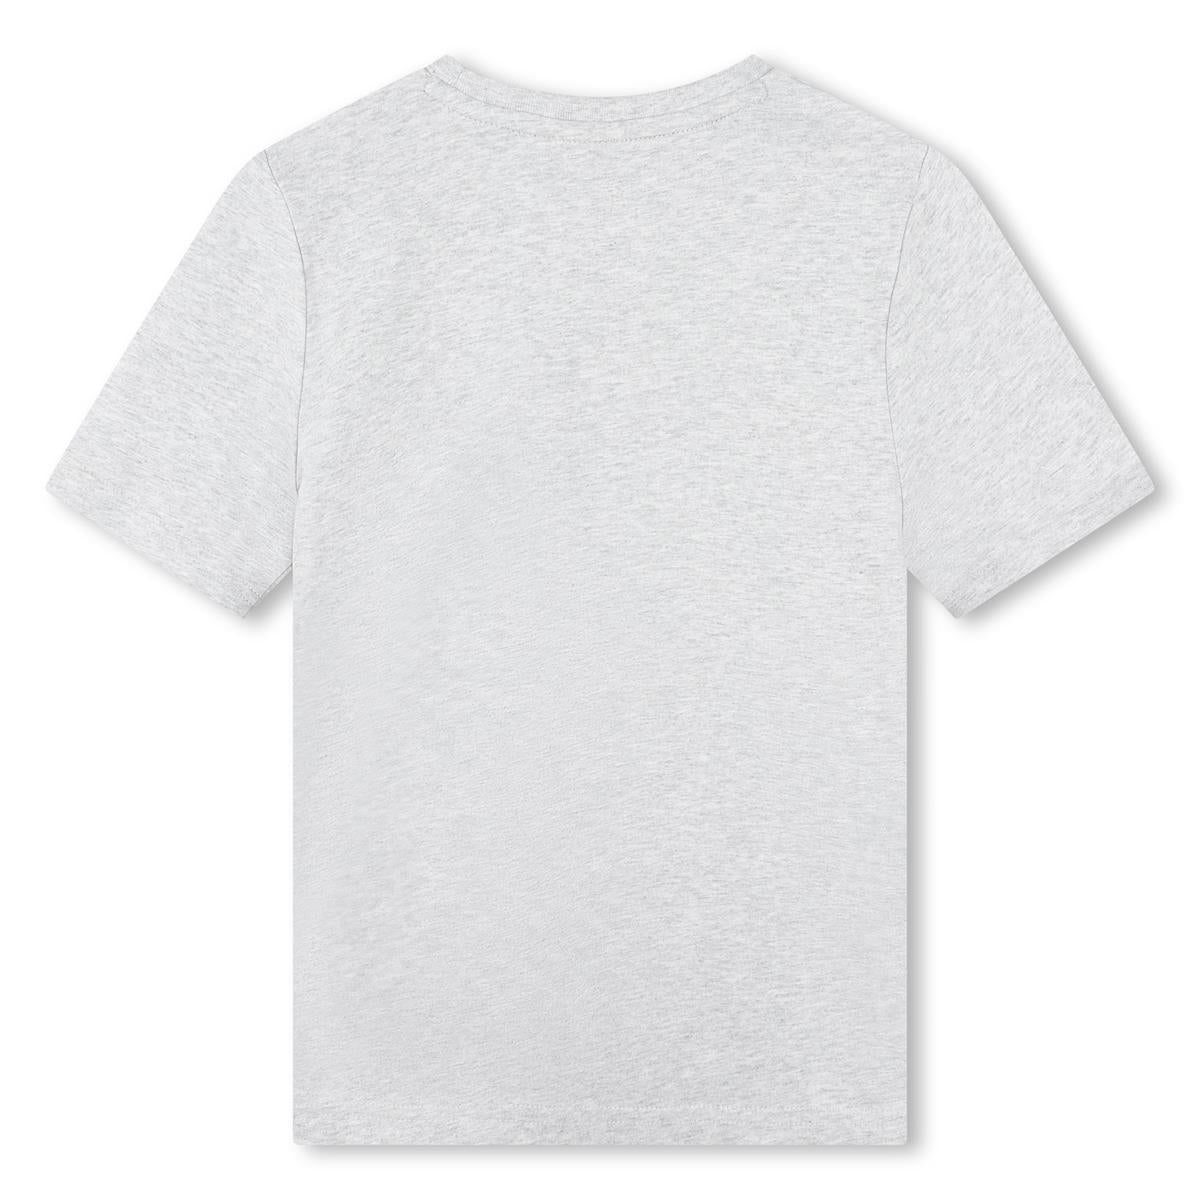 Boys Light Grey Cotton T-Shirt